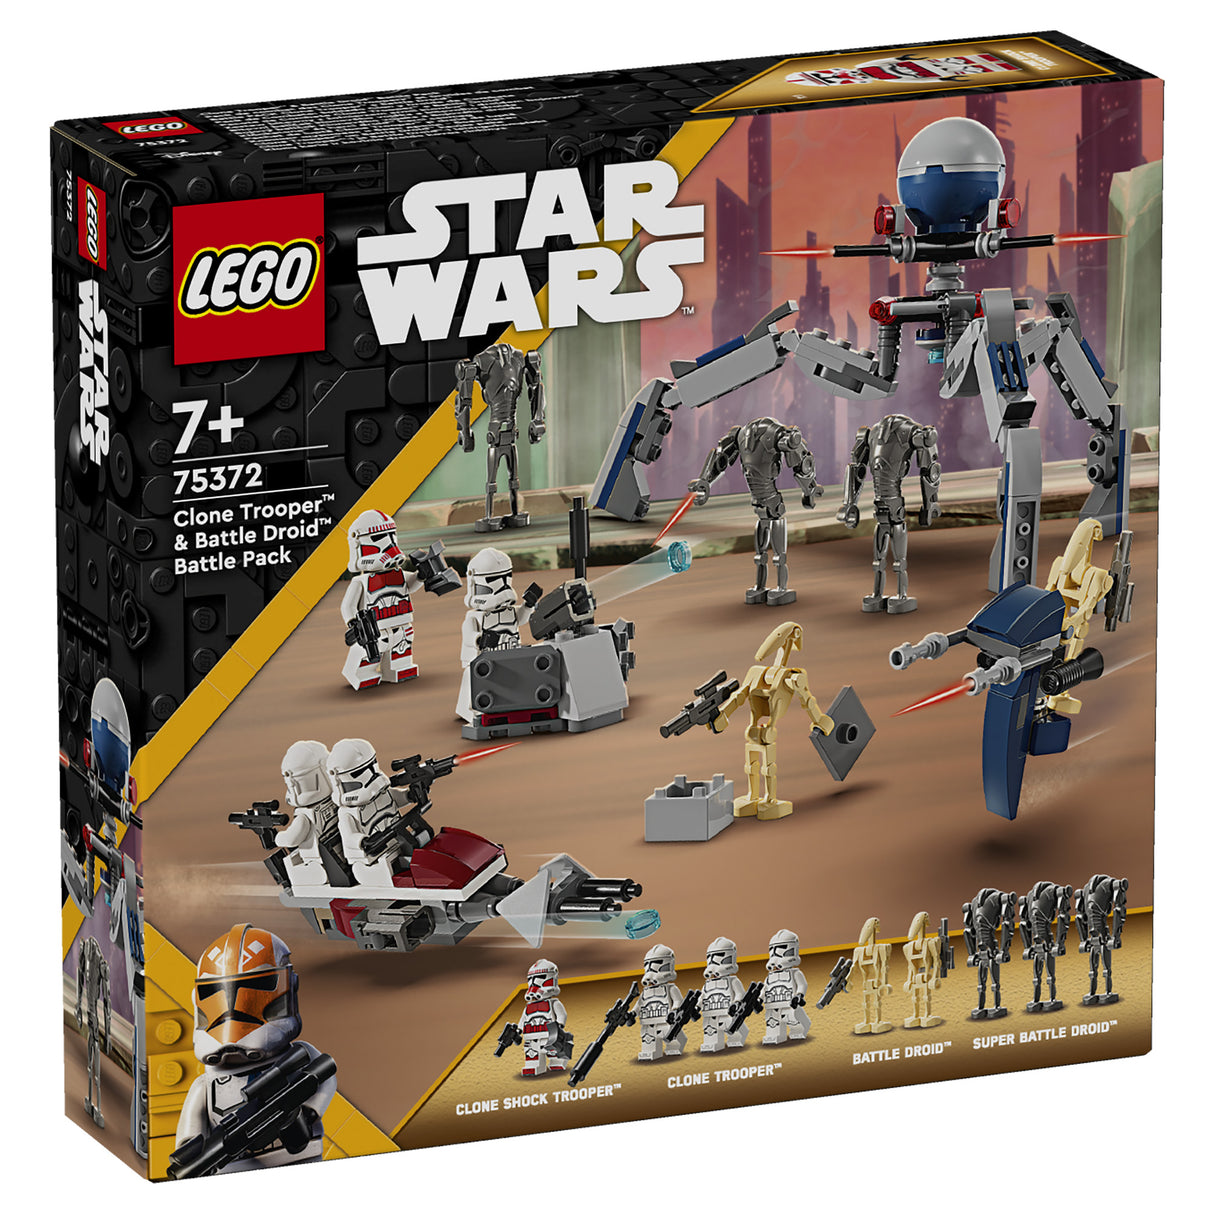 LEGO Star Wars Clone Trooper & Battle Droid Battle Pack 75372, (215-pieces)